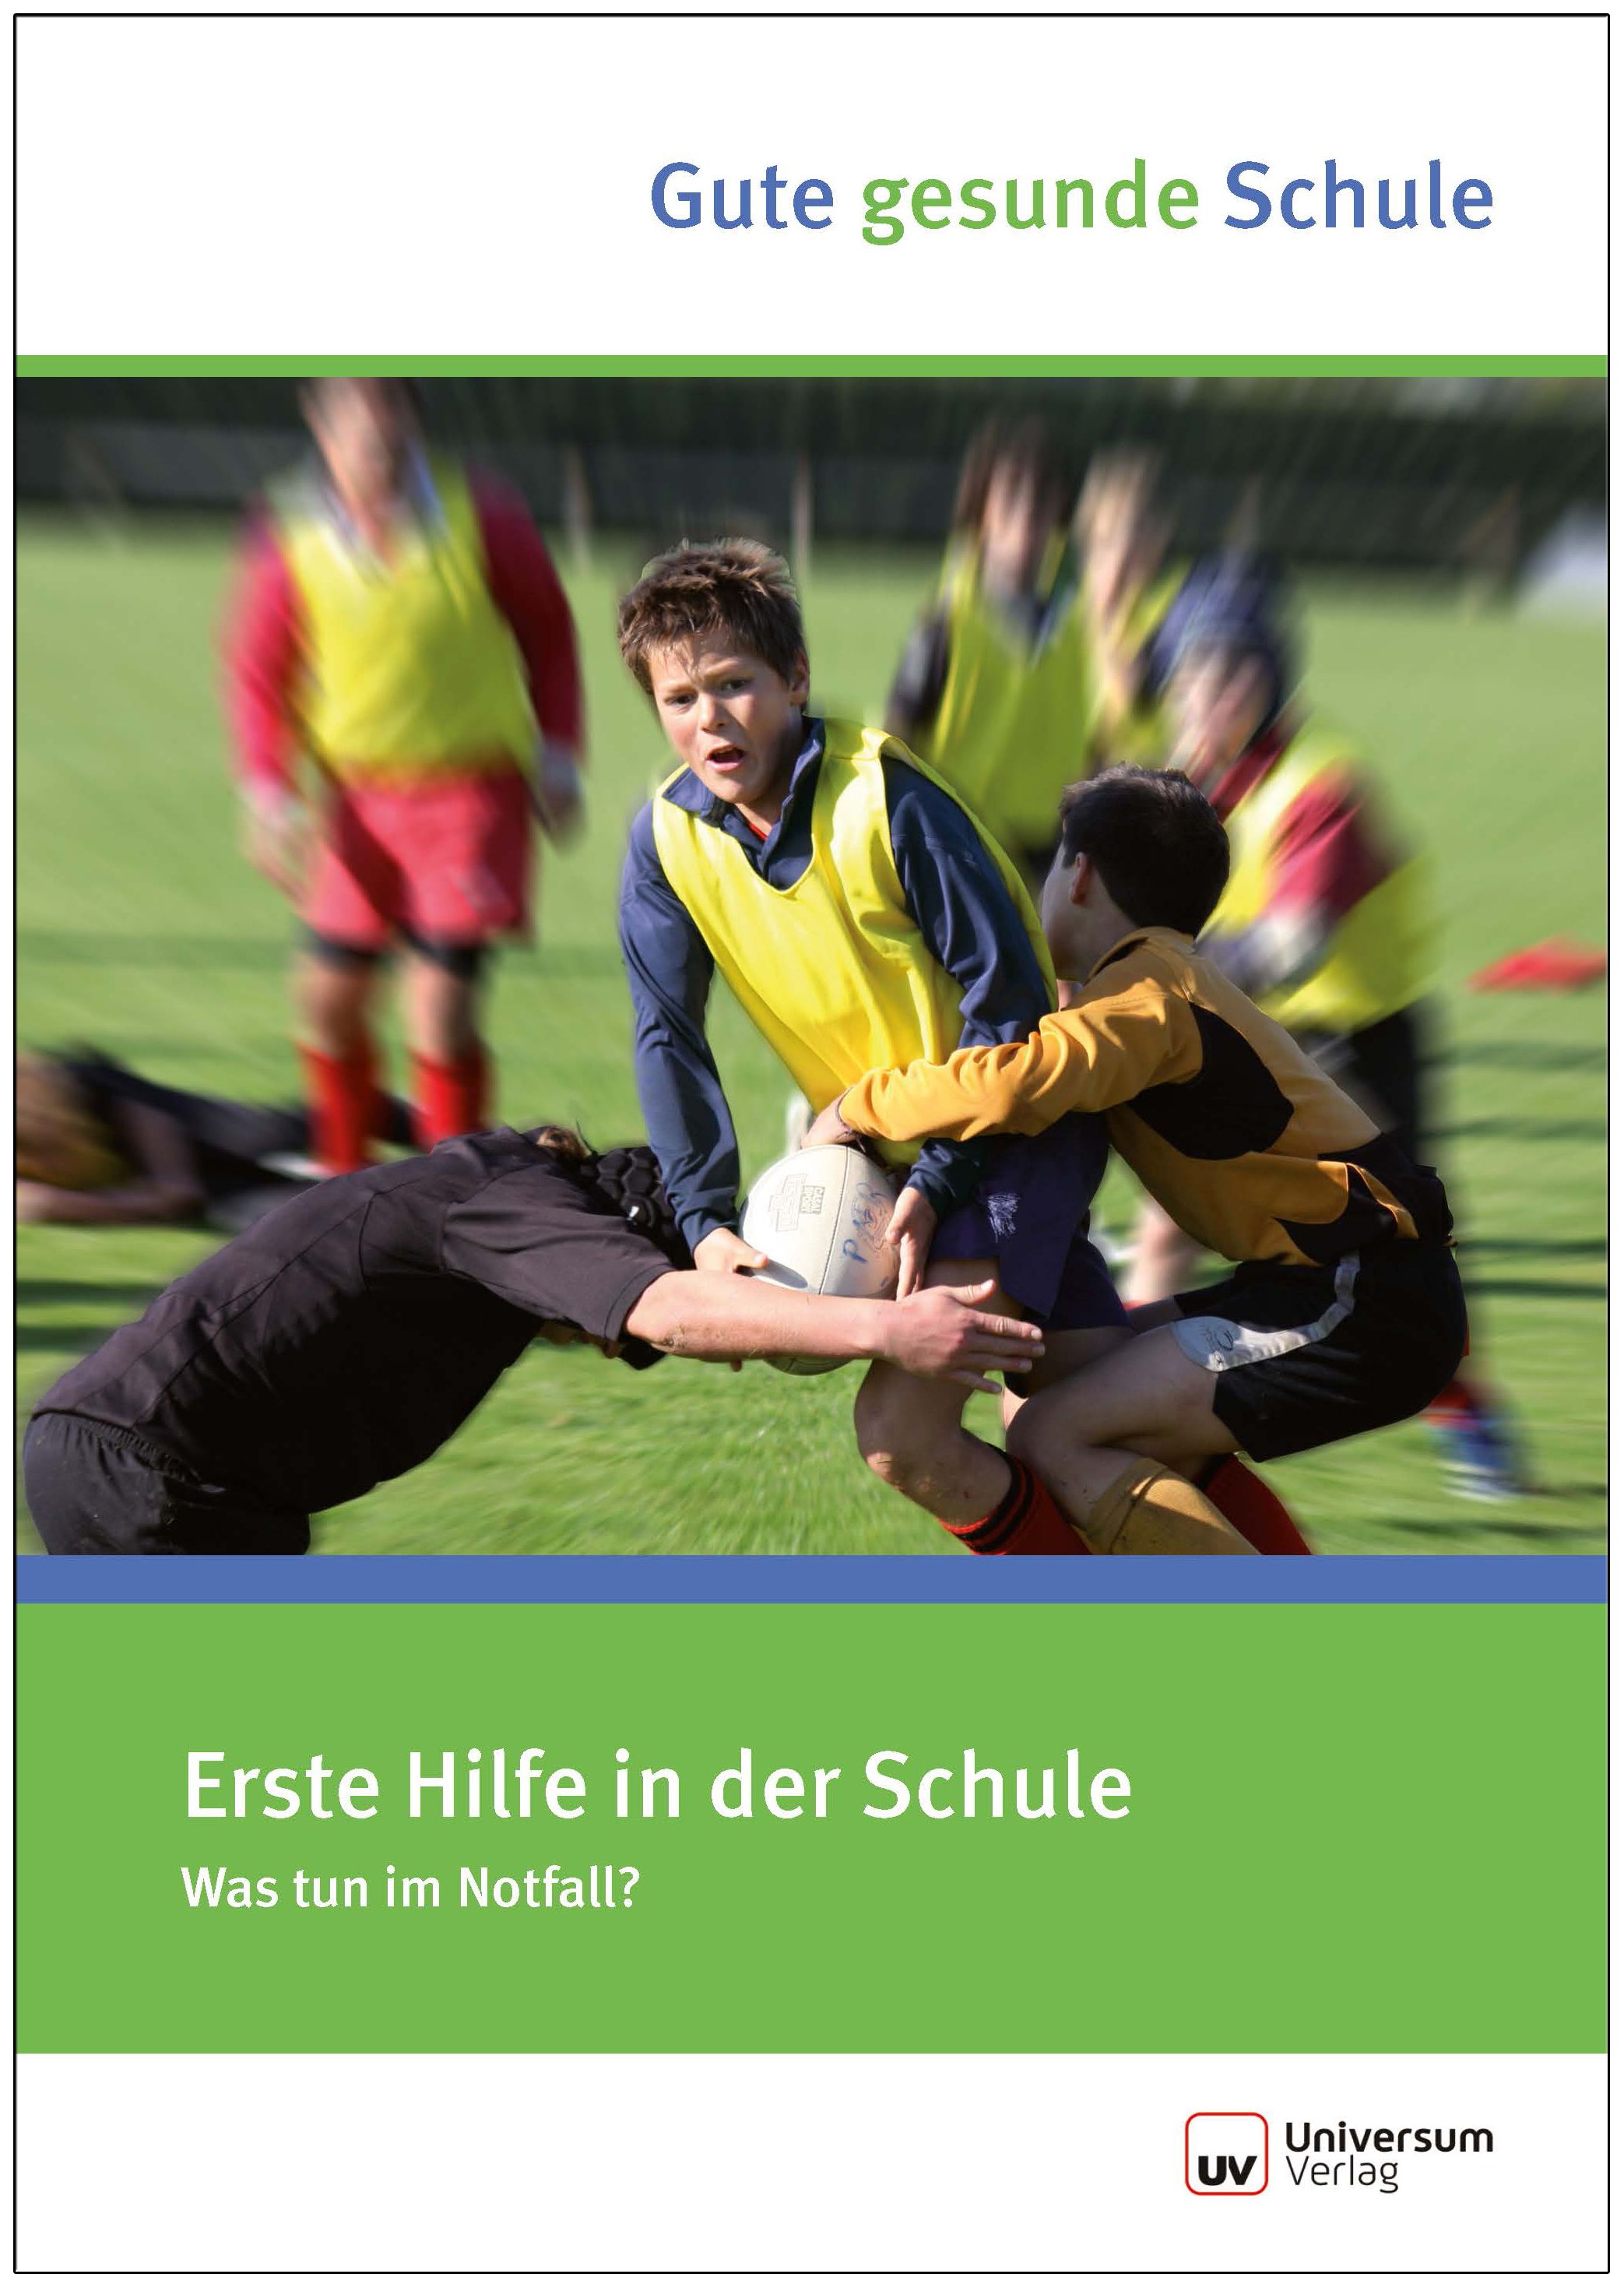 Erste Hilfe in Schulen - Gute gesunde Schule (Broschüre)